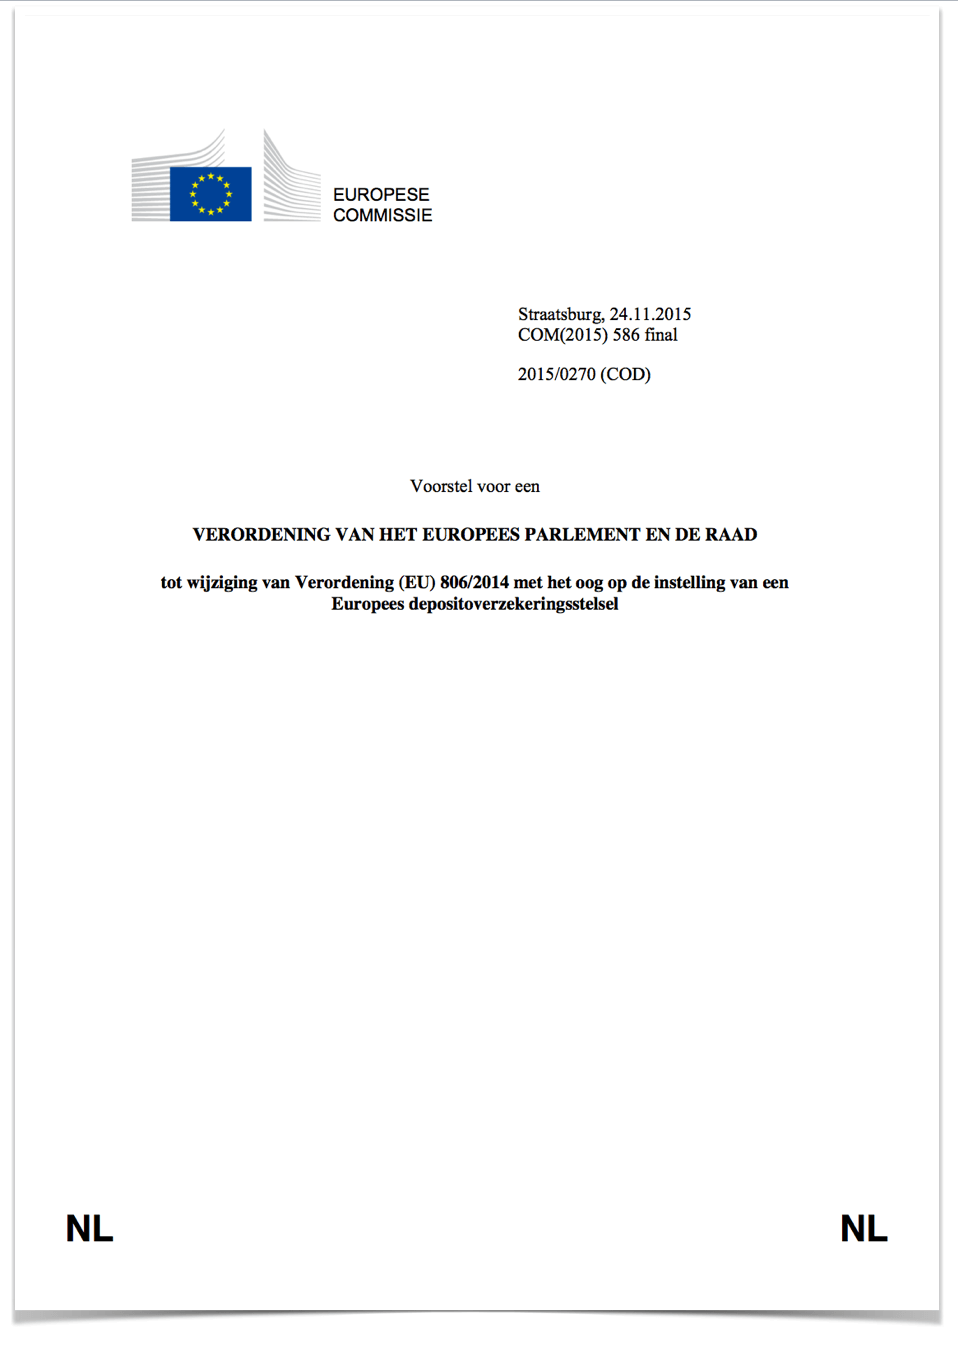 [26] Voorstel Europees depositoverzekering stelselVoorstel Europees depositoverzekering stelsel